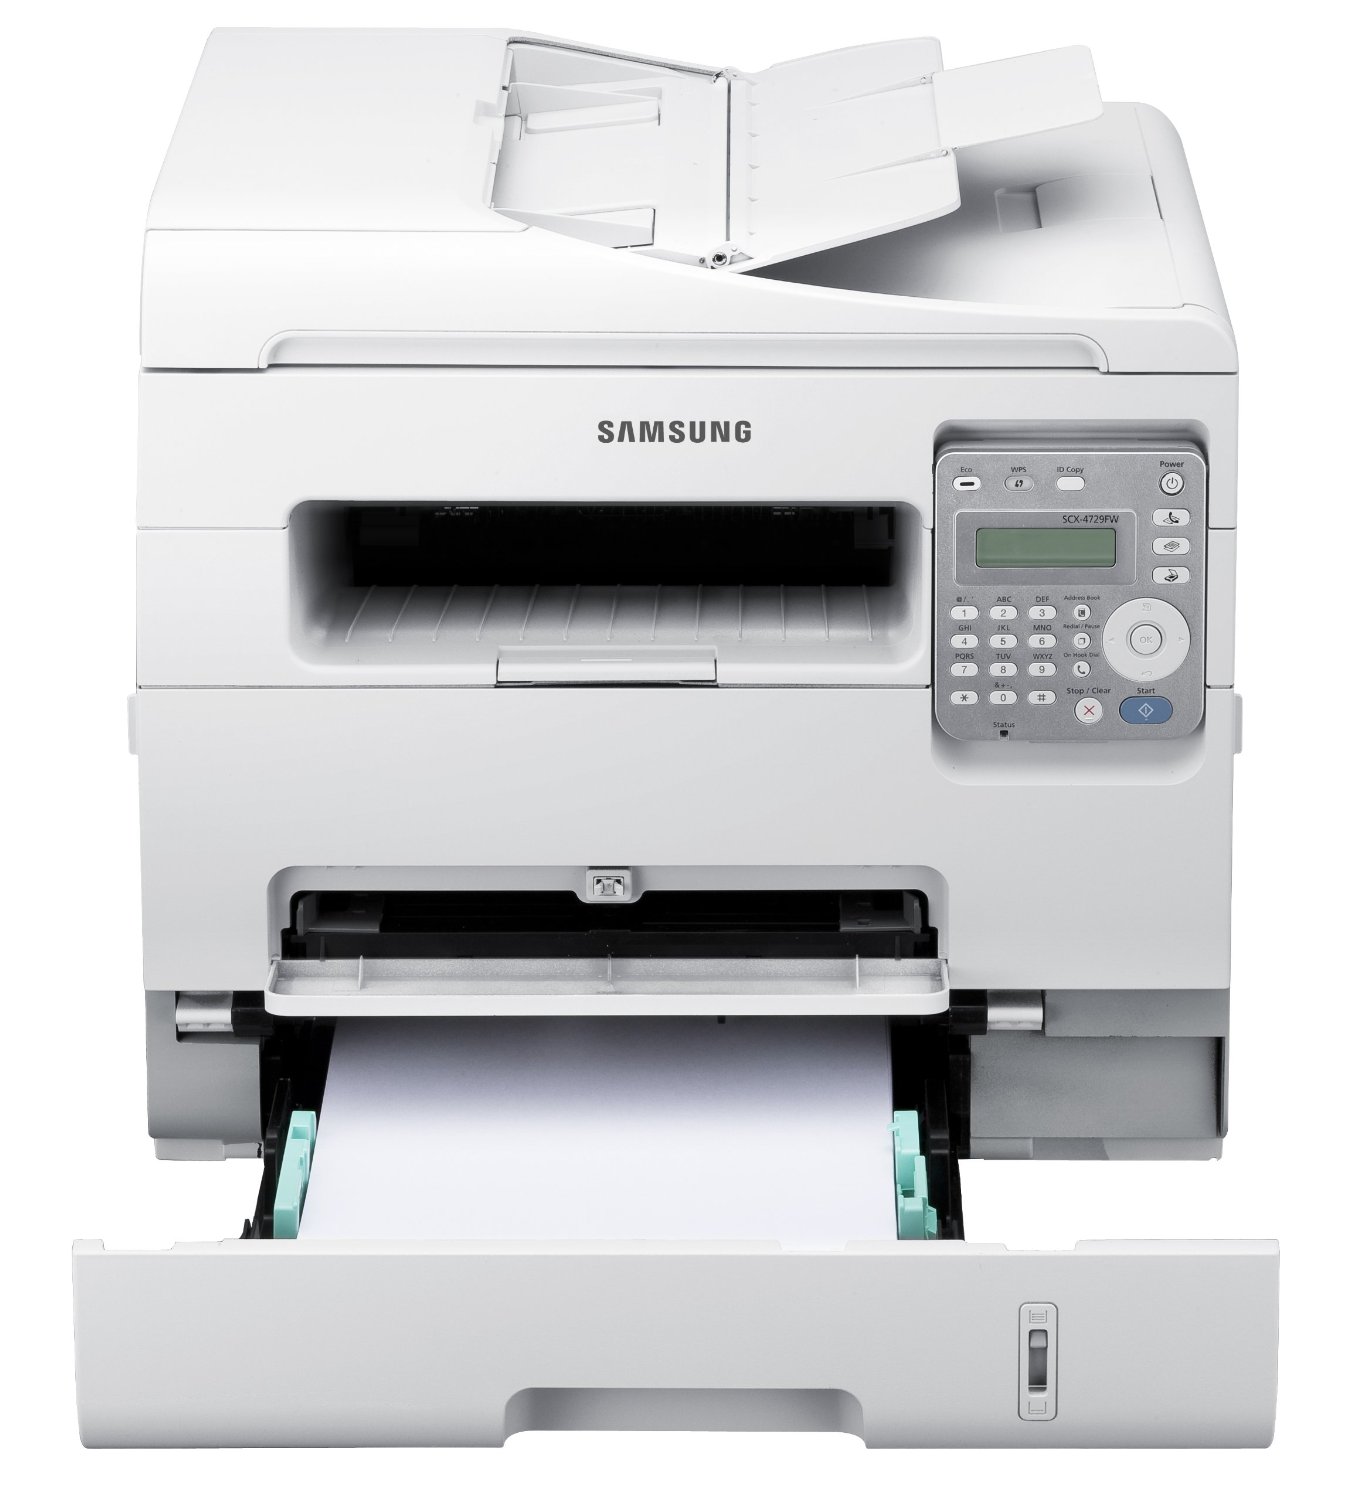 Samsung SCX-4729FW 29PPM Wireless Monochrome Printer with Duplex printing